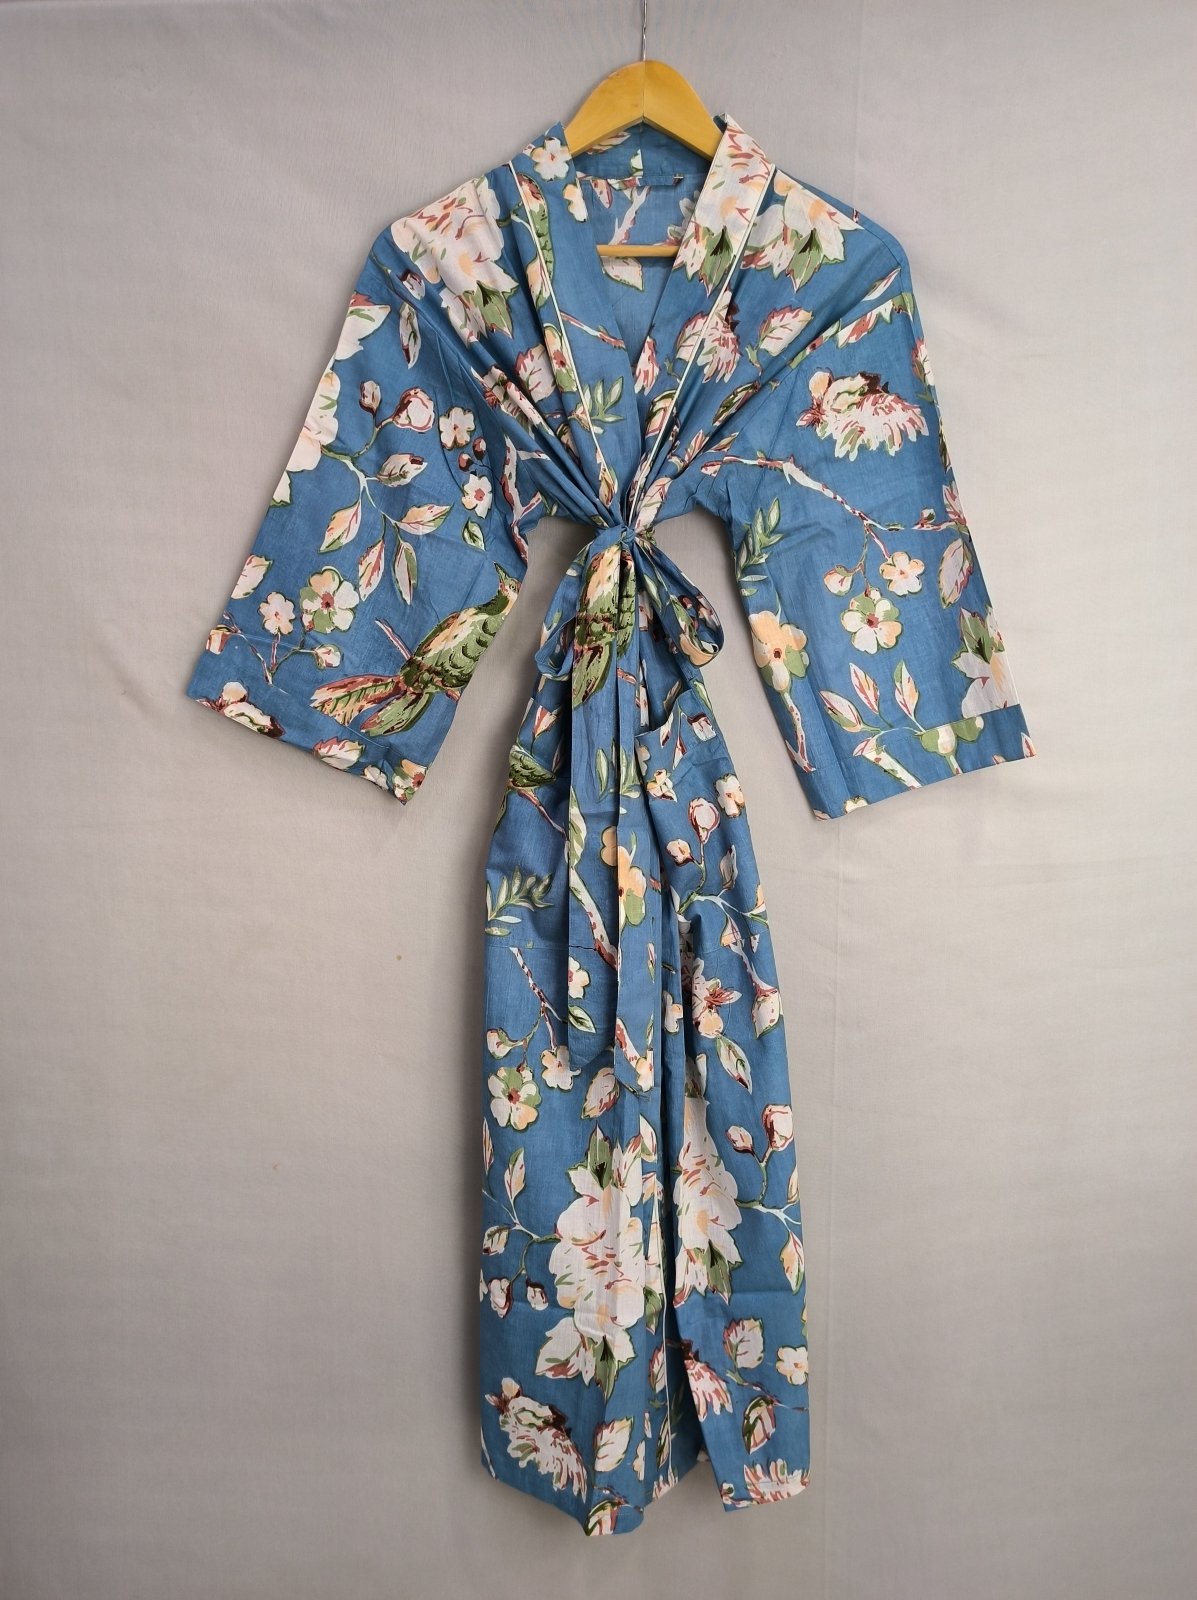 Pure Cotton Kimono Indian Handprinted Boho House Robe Summer Dress, Aqua Blue white Floral Beach Coverup Maternity Mom Bridal - The Eastern Loom